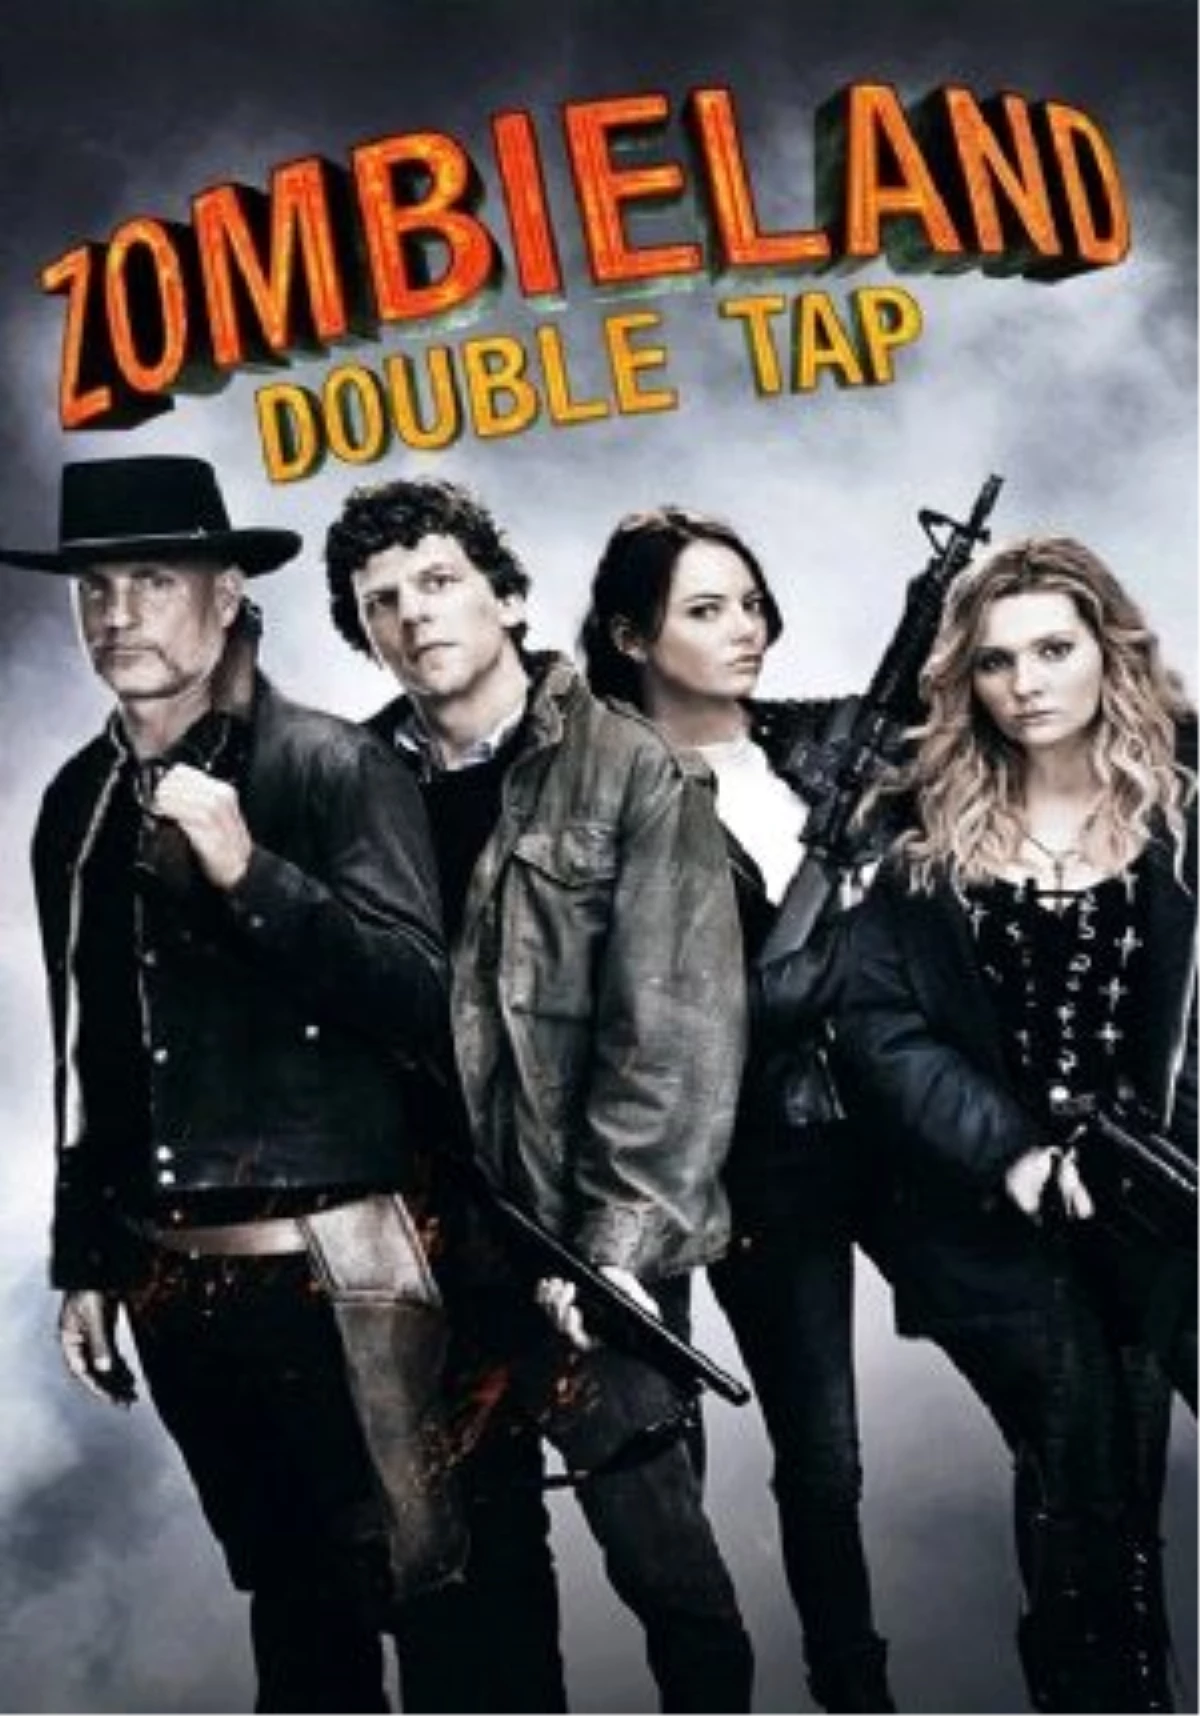 Zombieland 2: Double Tap Filmi